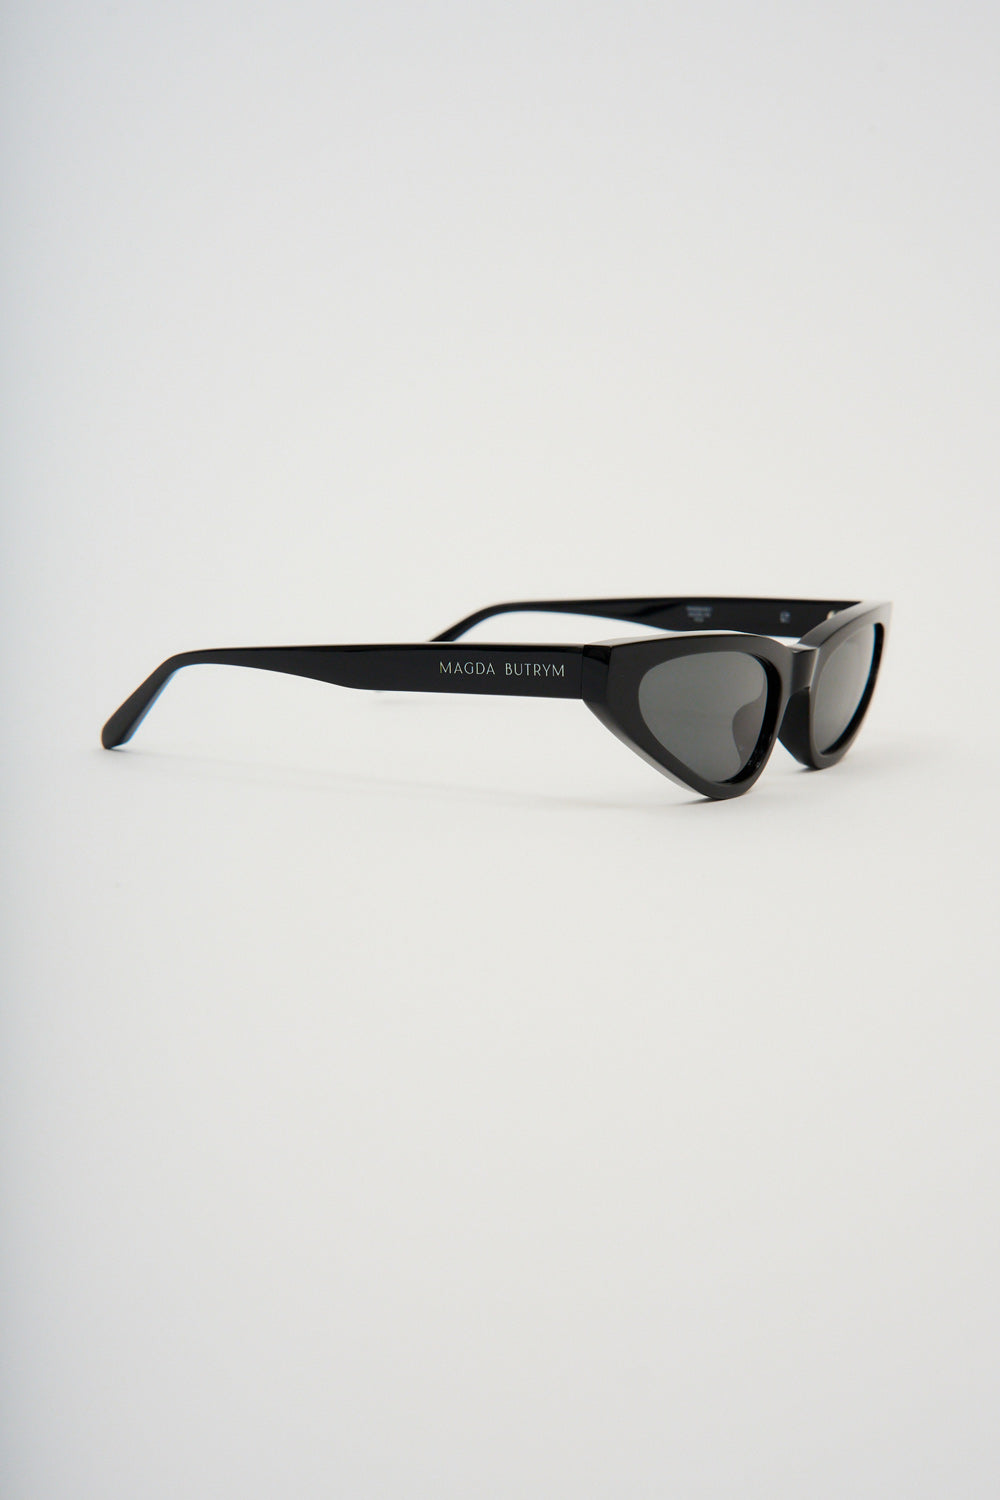 Narrow Cat Eye Black Sunglasses